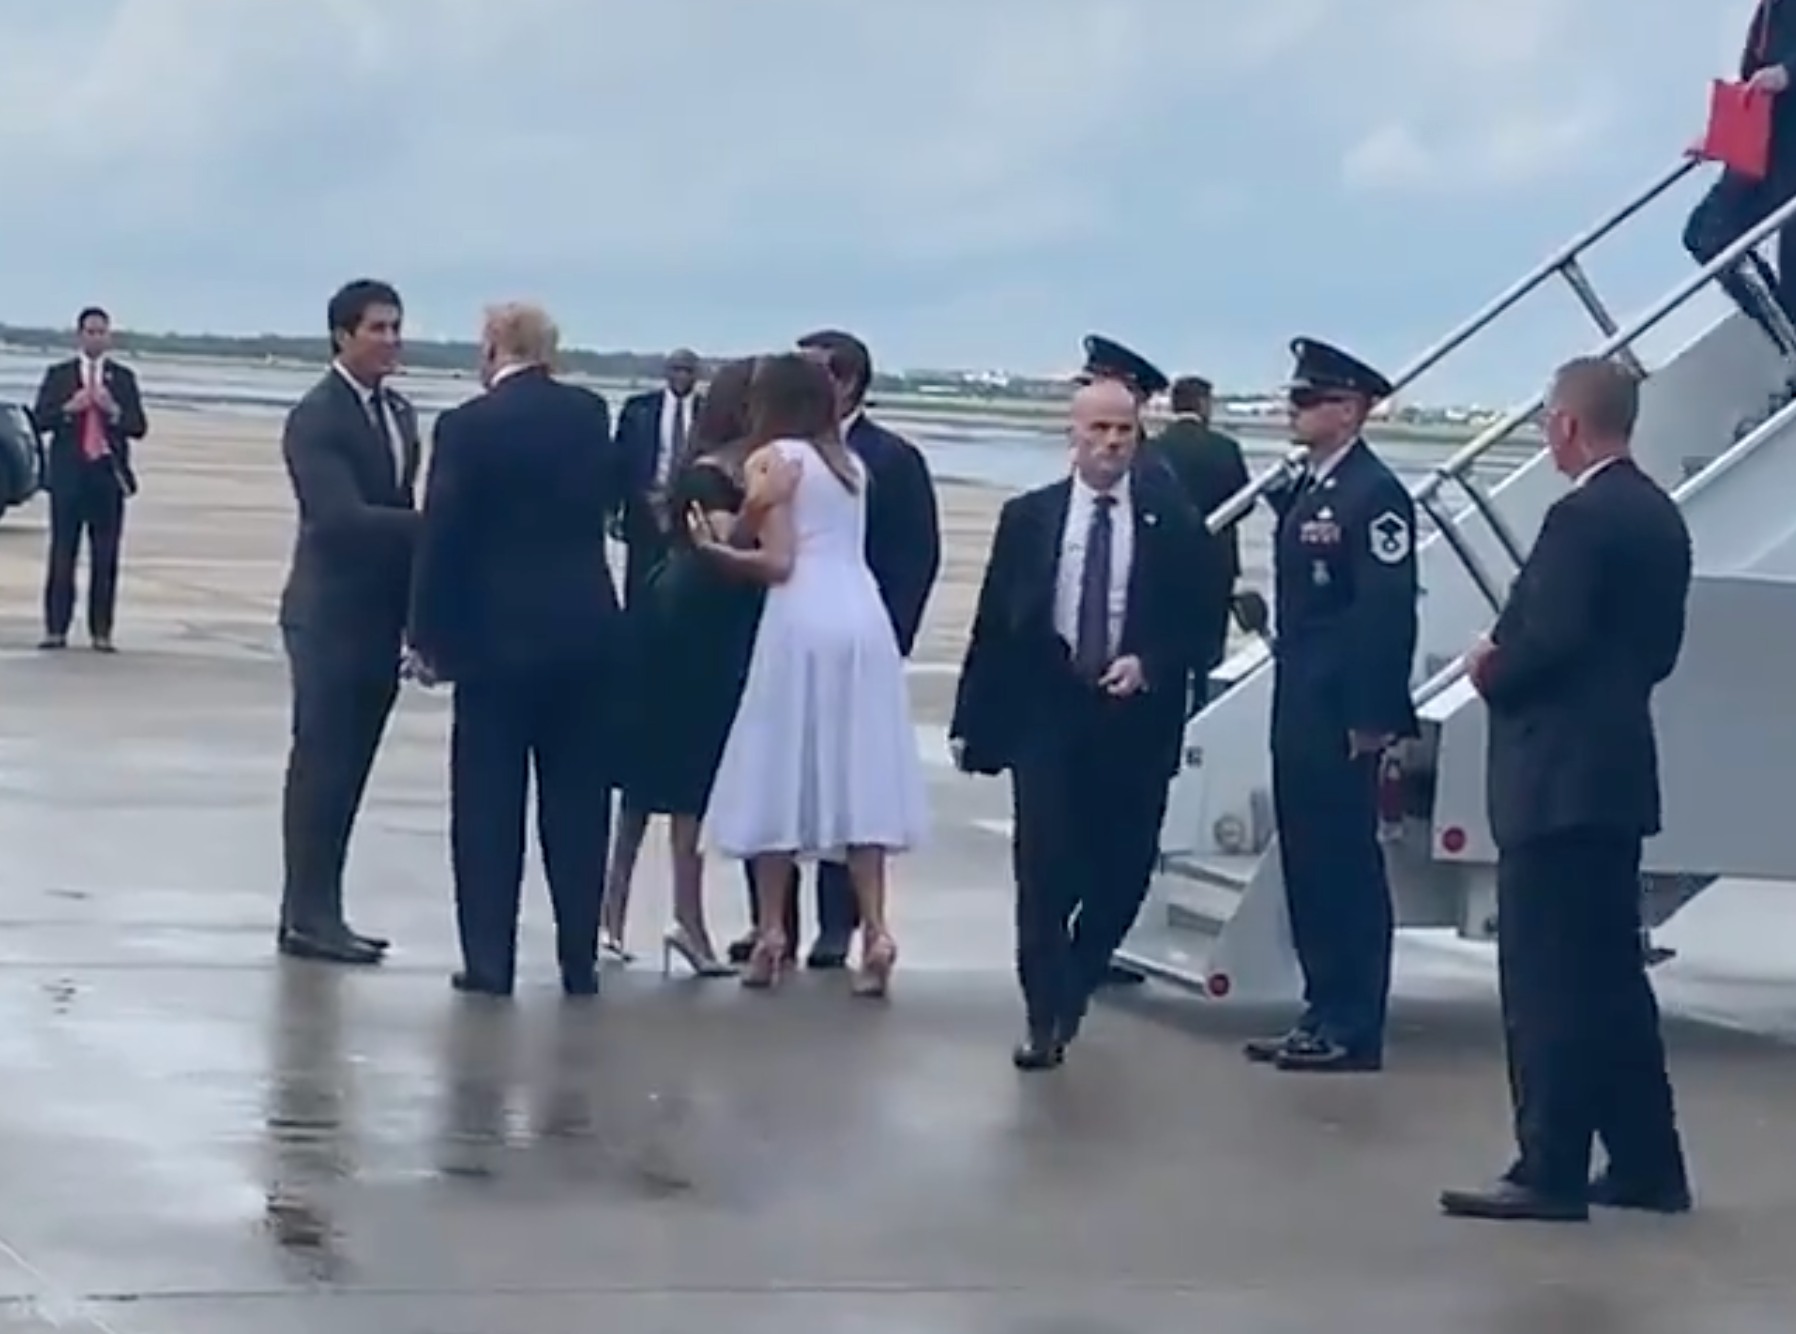 <p>Donald and Melania Trump meet Jason Pirozzolo at an Orlando airport in 2019</p>